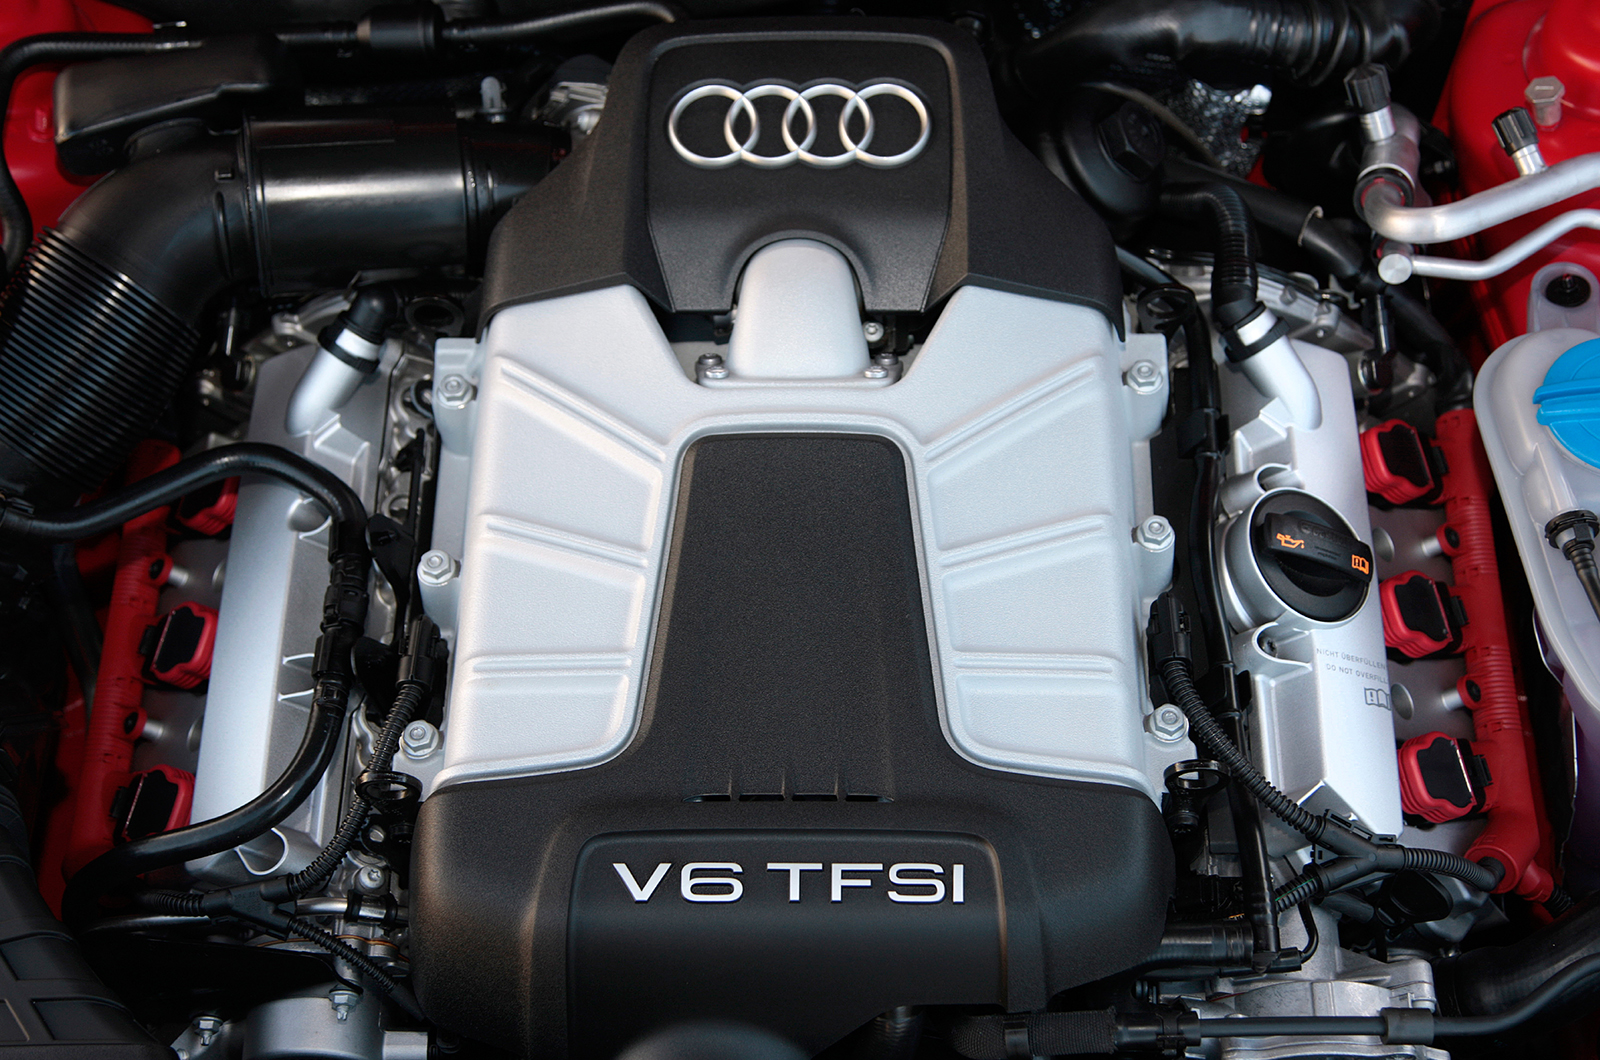 Audi S4's V6 engine block